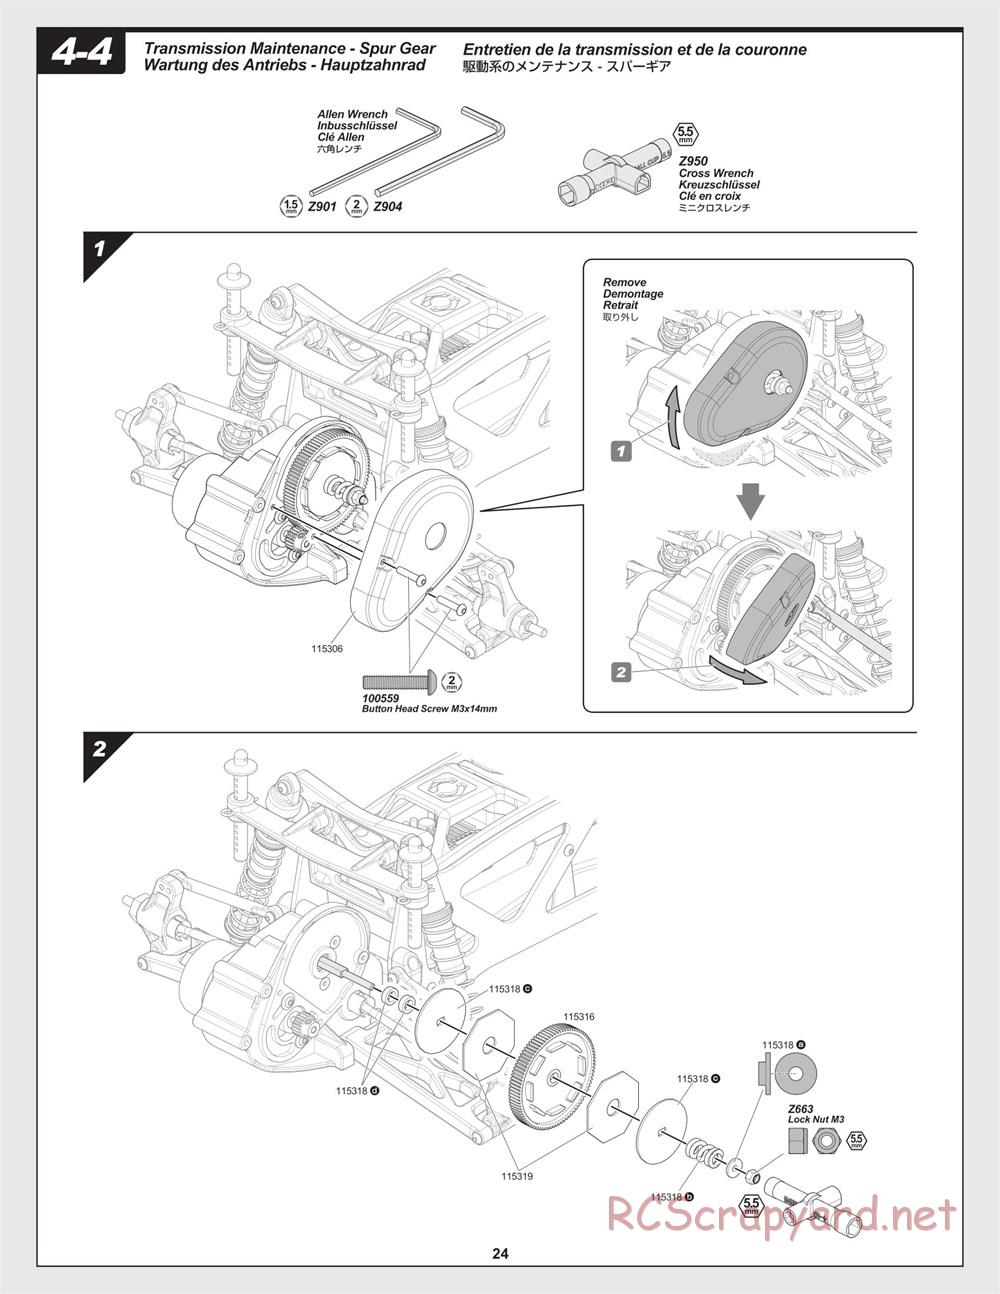 HPI - Jumpshot MT - Manual - Page 24